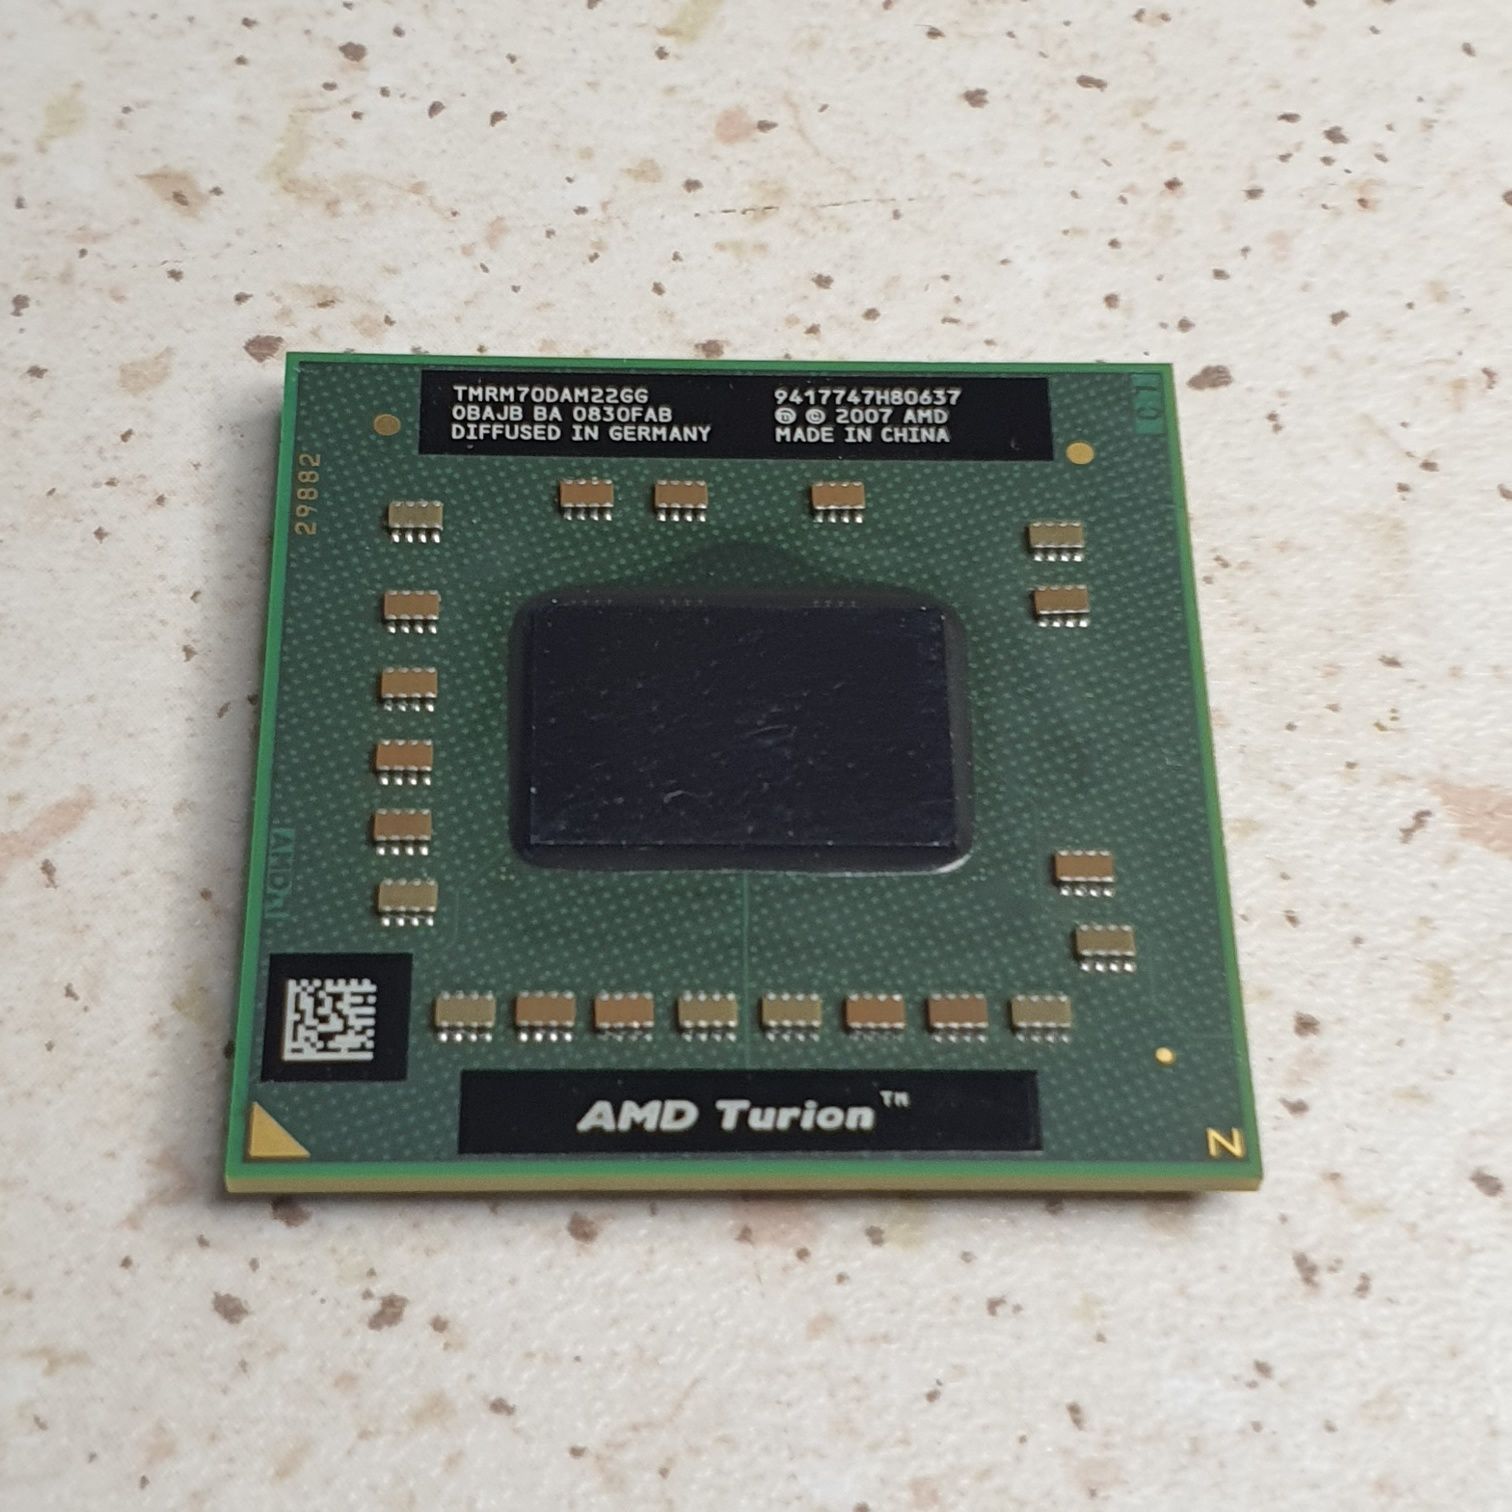 Procesor AMD Turion 64 X2 Mobile 2GHz TMRM70DAM22GG Socket S1g2